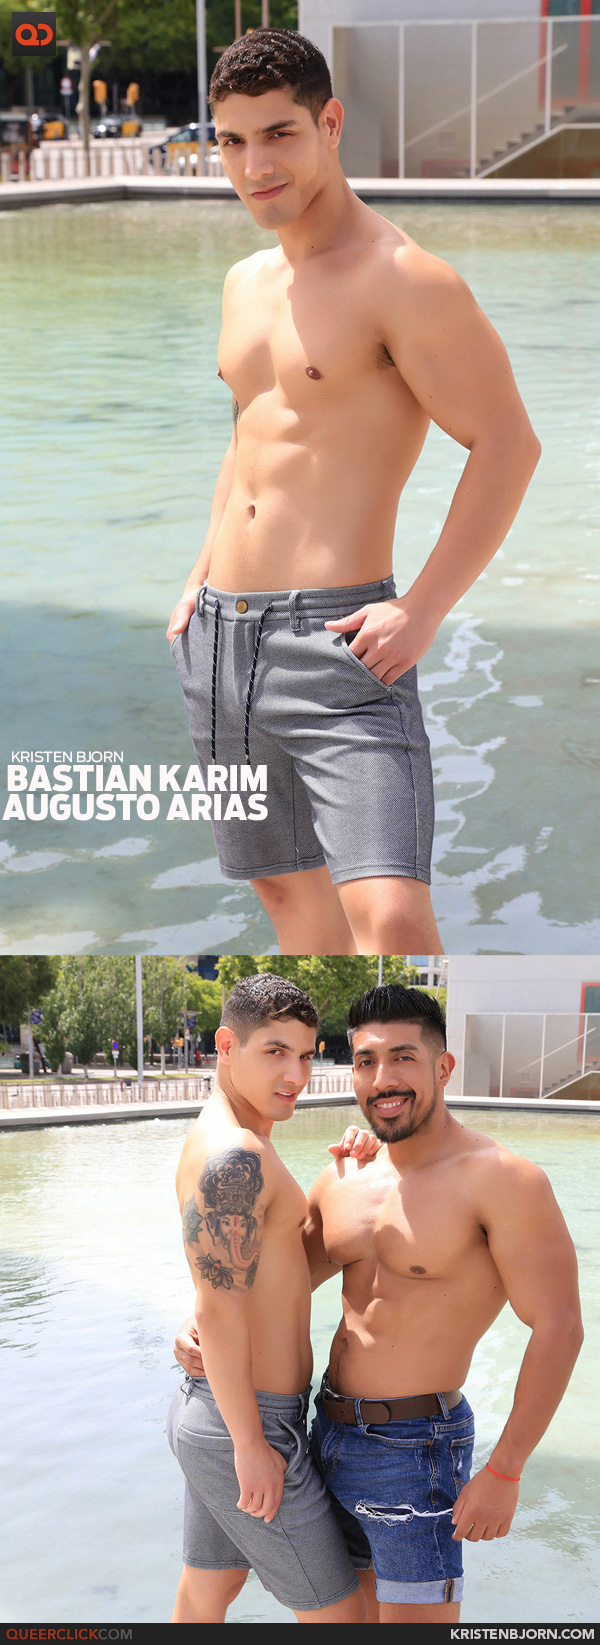 Kristen Bjorn: Augusto Arias and Bastian Karim